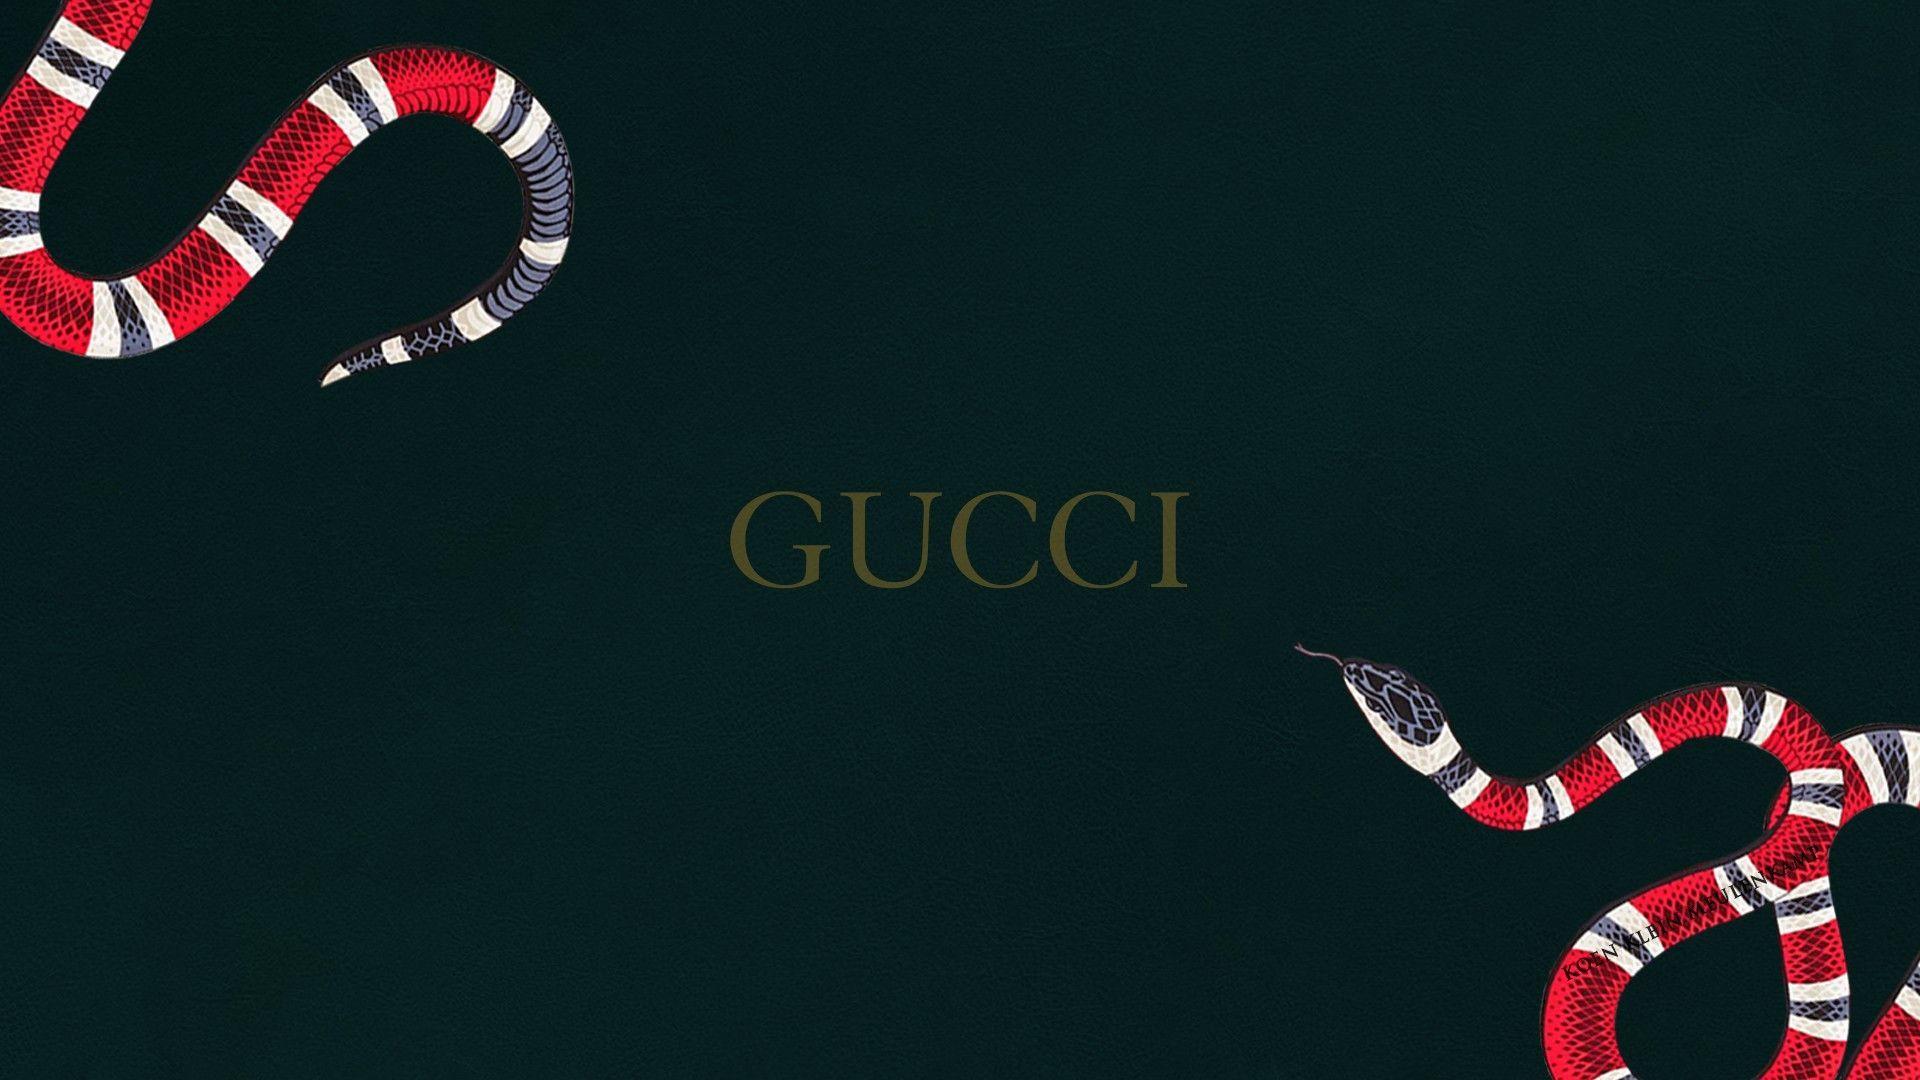 beautiful gucci wallpaper 1920x1080 HD 1080p. Gucci in 2019